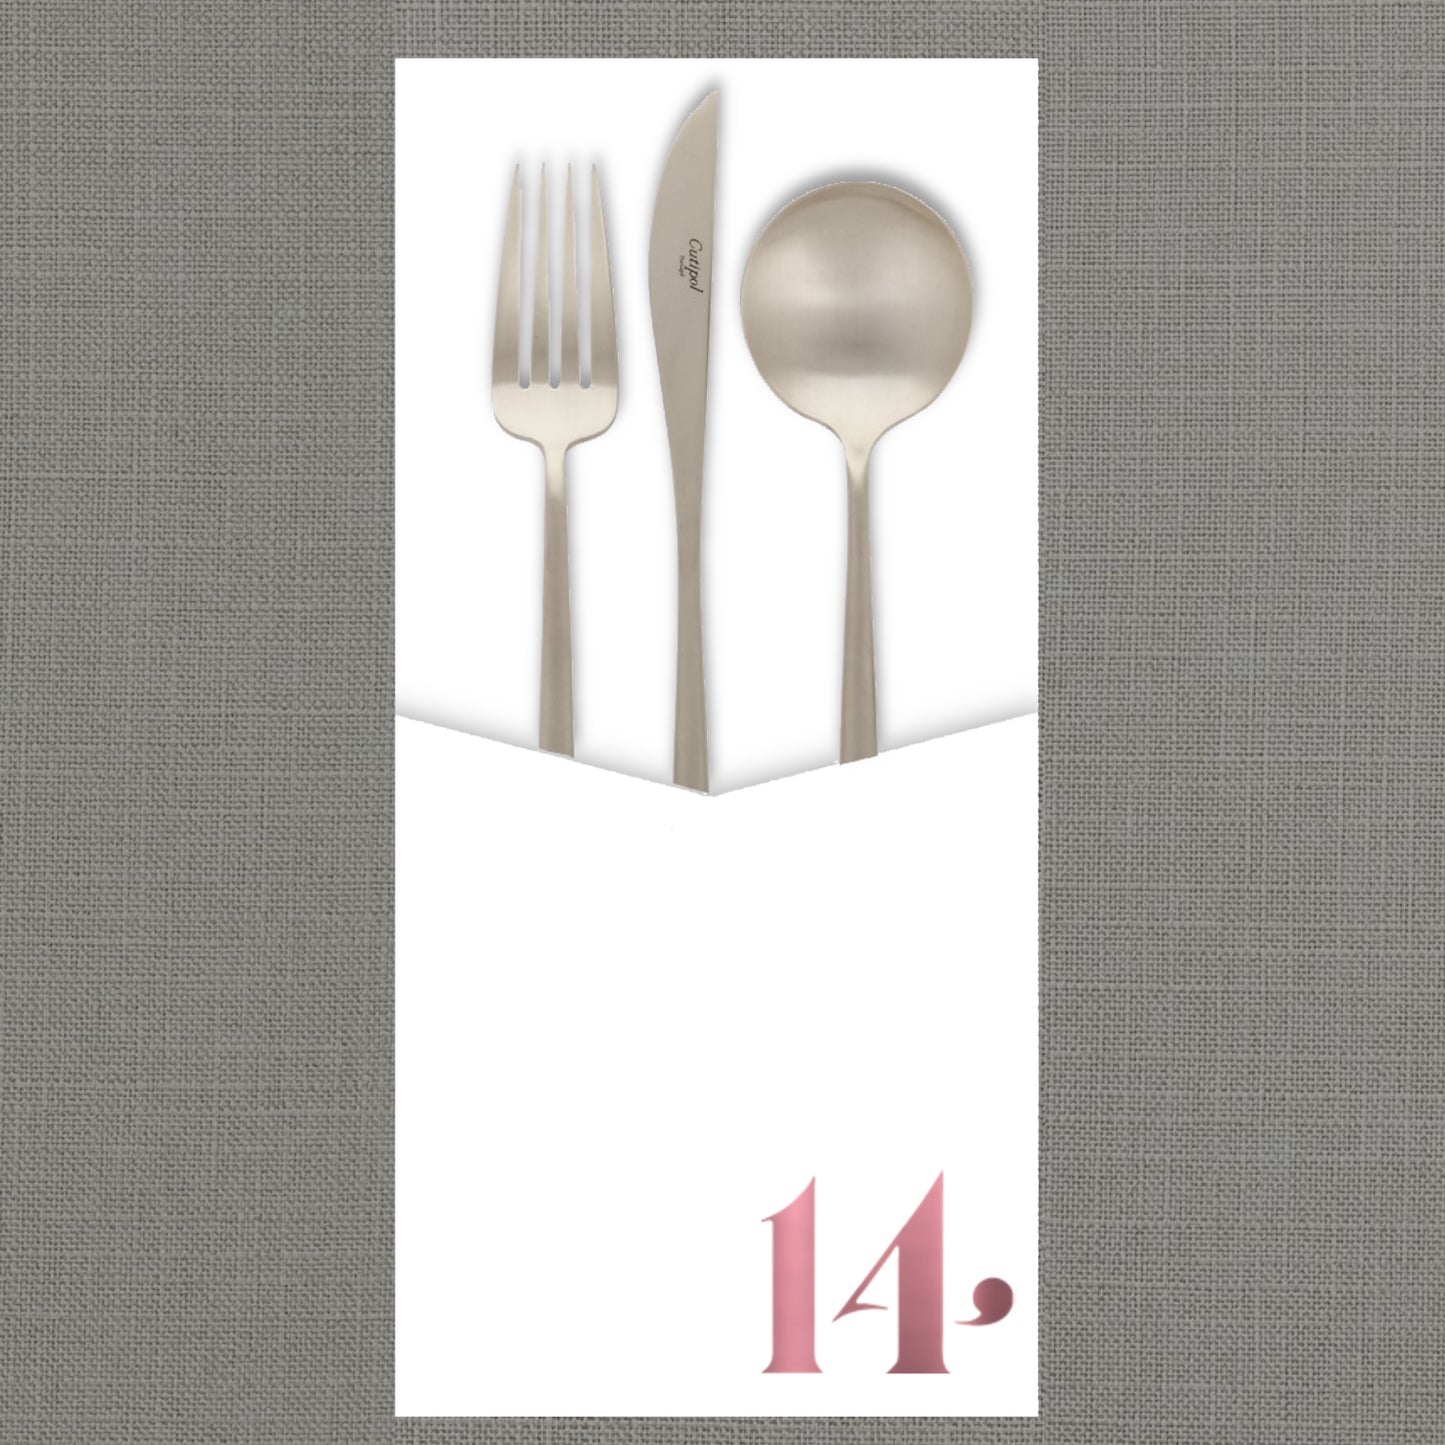 Foil Celebrate! 14 - Cutlery Pouch